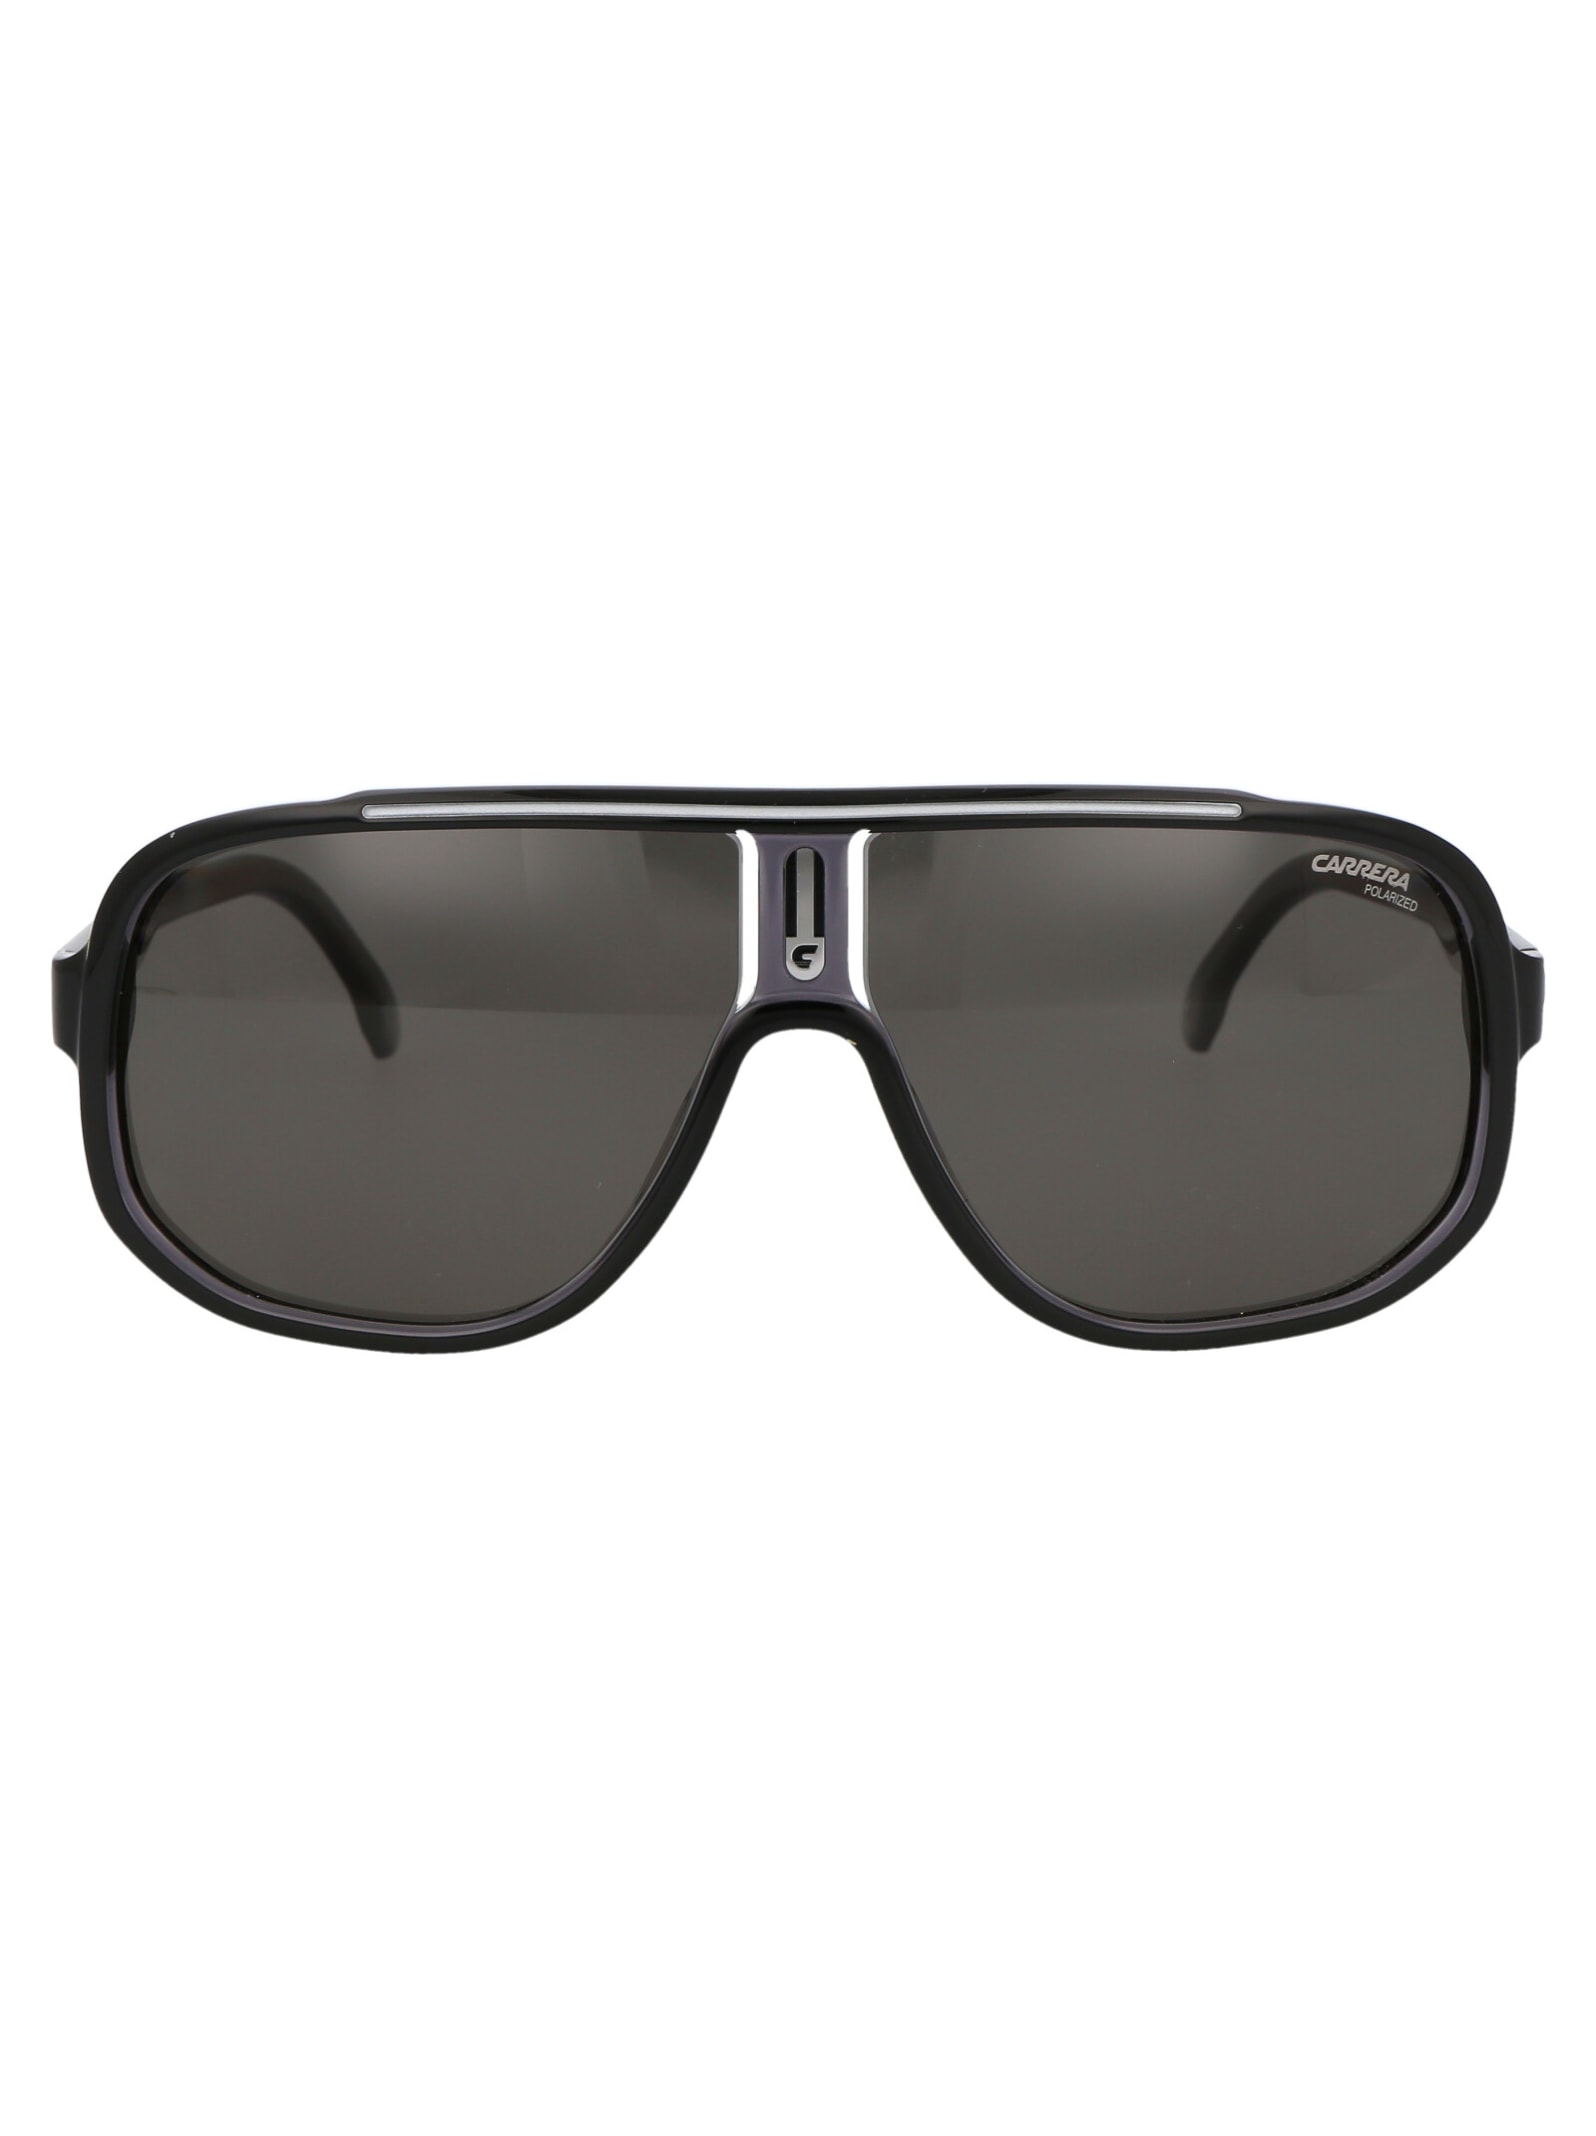 Carrera 1058/s Sunglasses